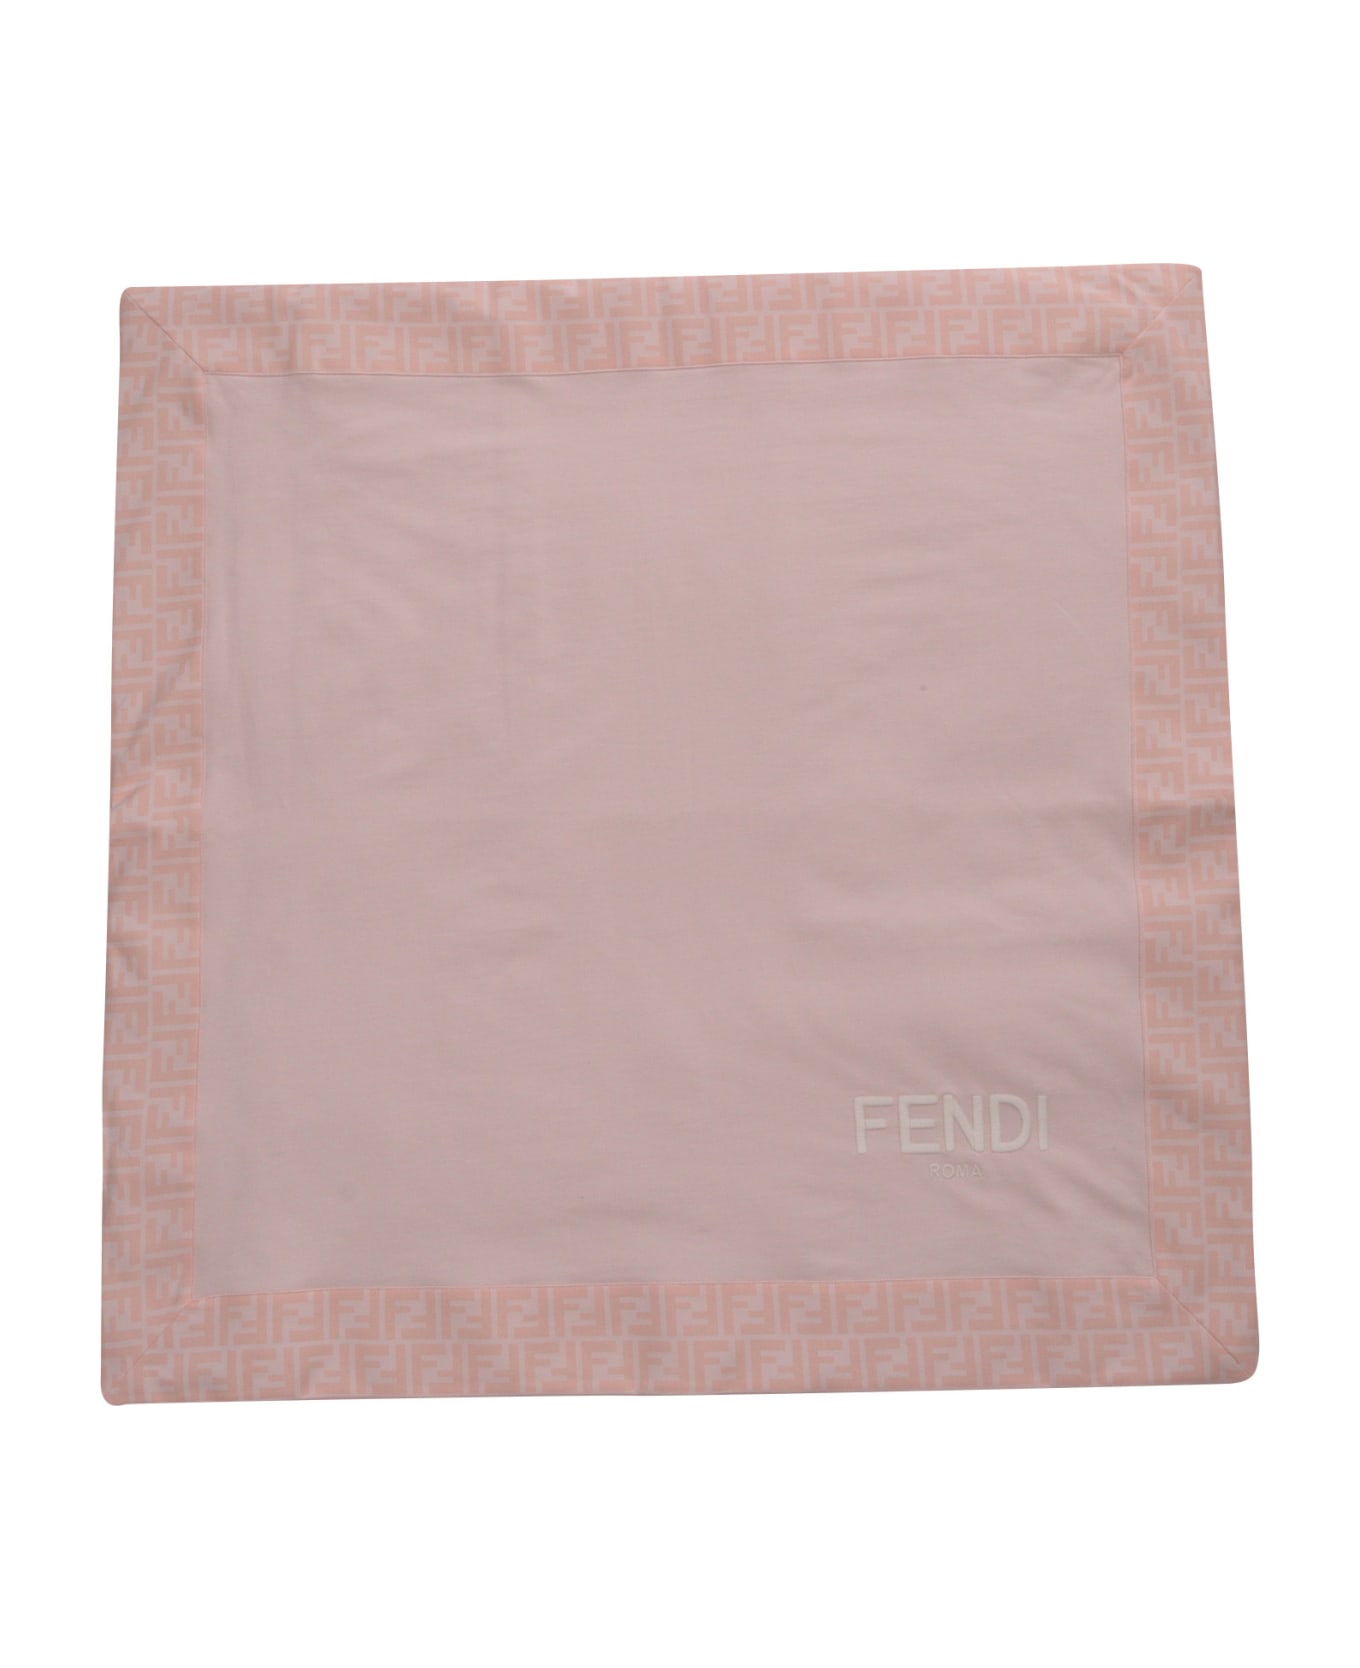 Fendi Pink Ff Blanket - PINK